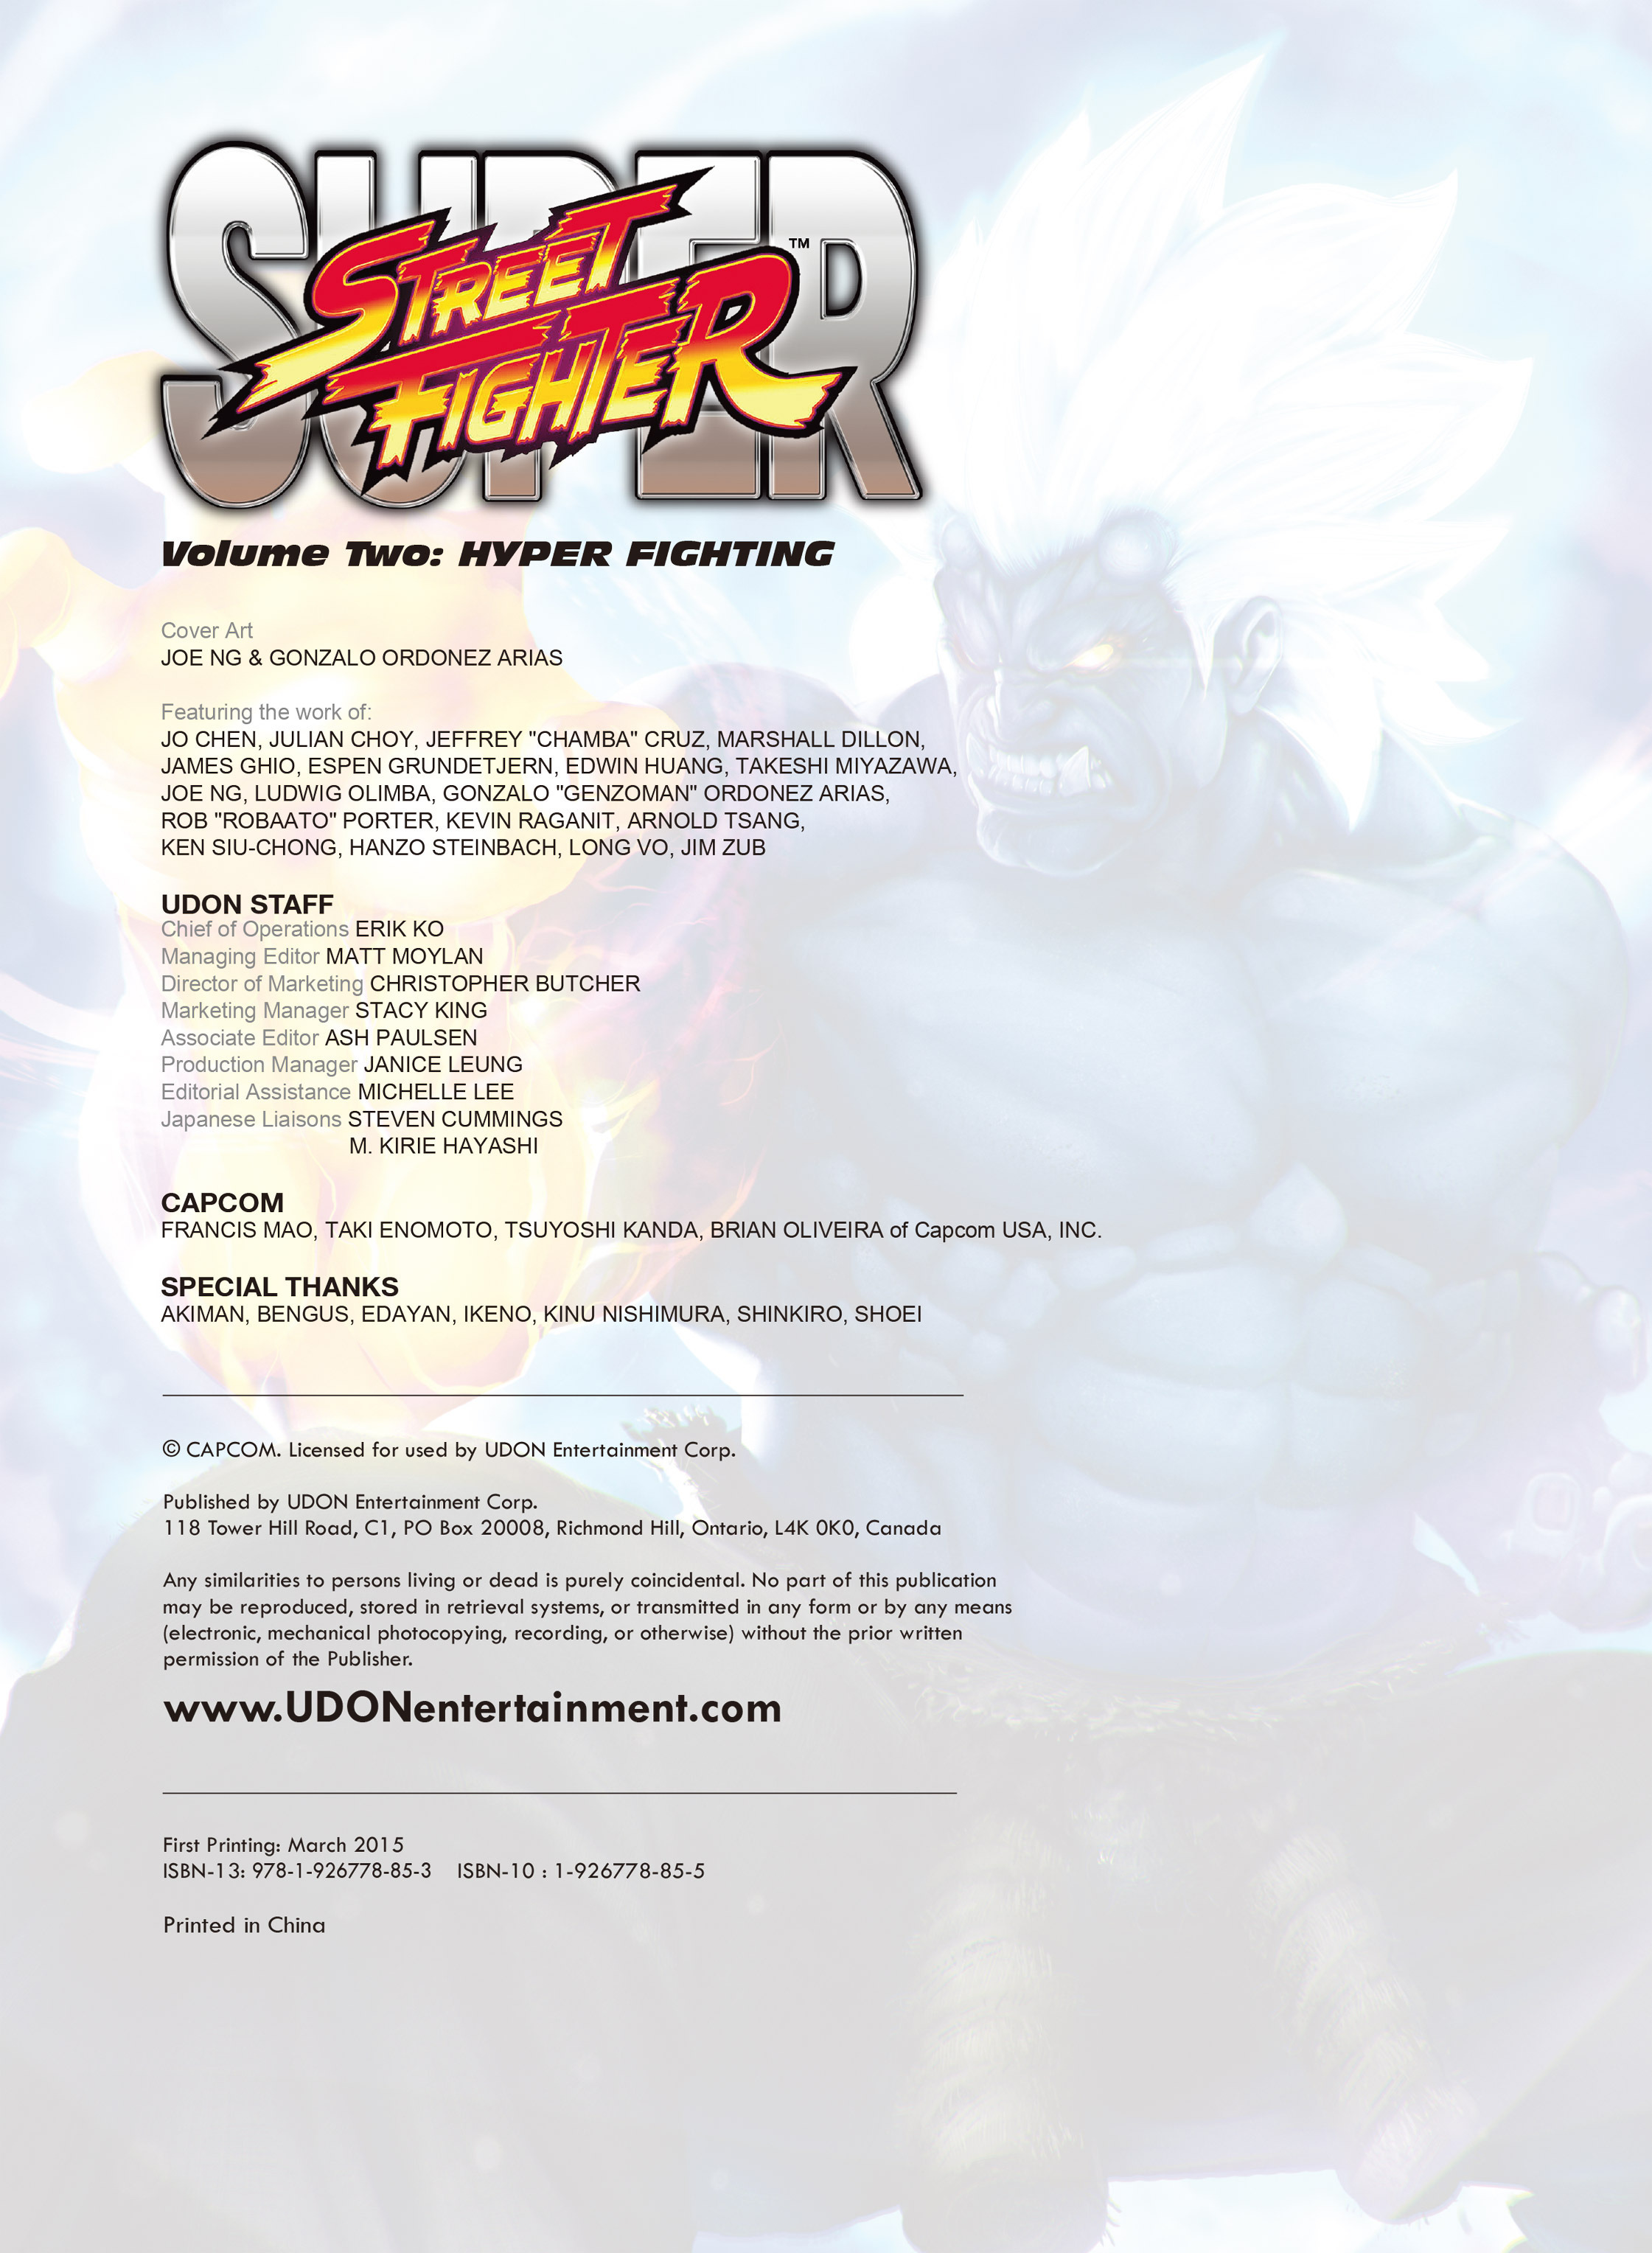 Read online Super Street Fighter comic -  Issue # Vol.2 - Hyper Fighting - 122